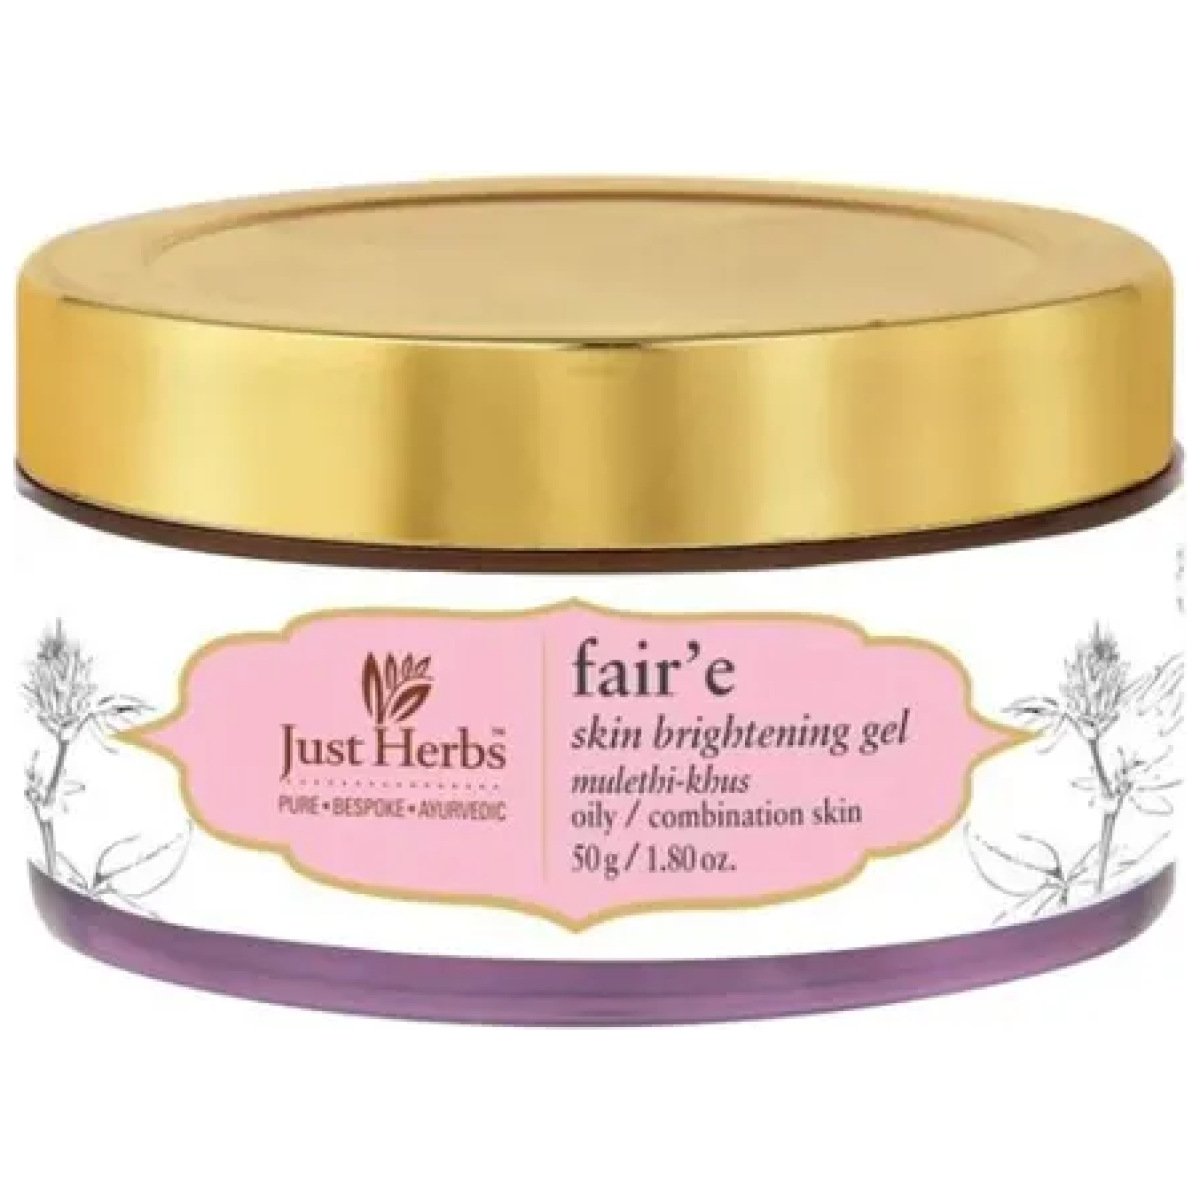 Just Herbs Fair'e Mulethi Skin Brightening Gel 50gm